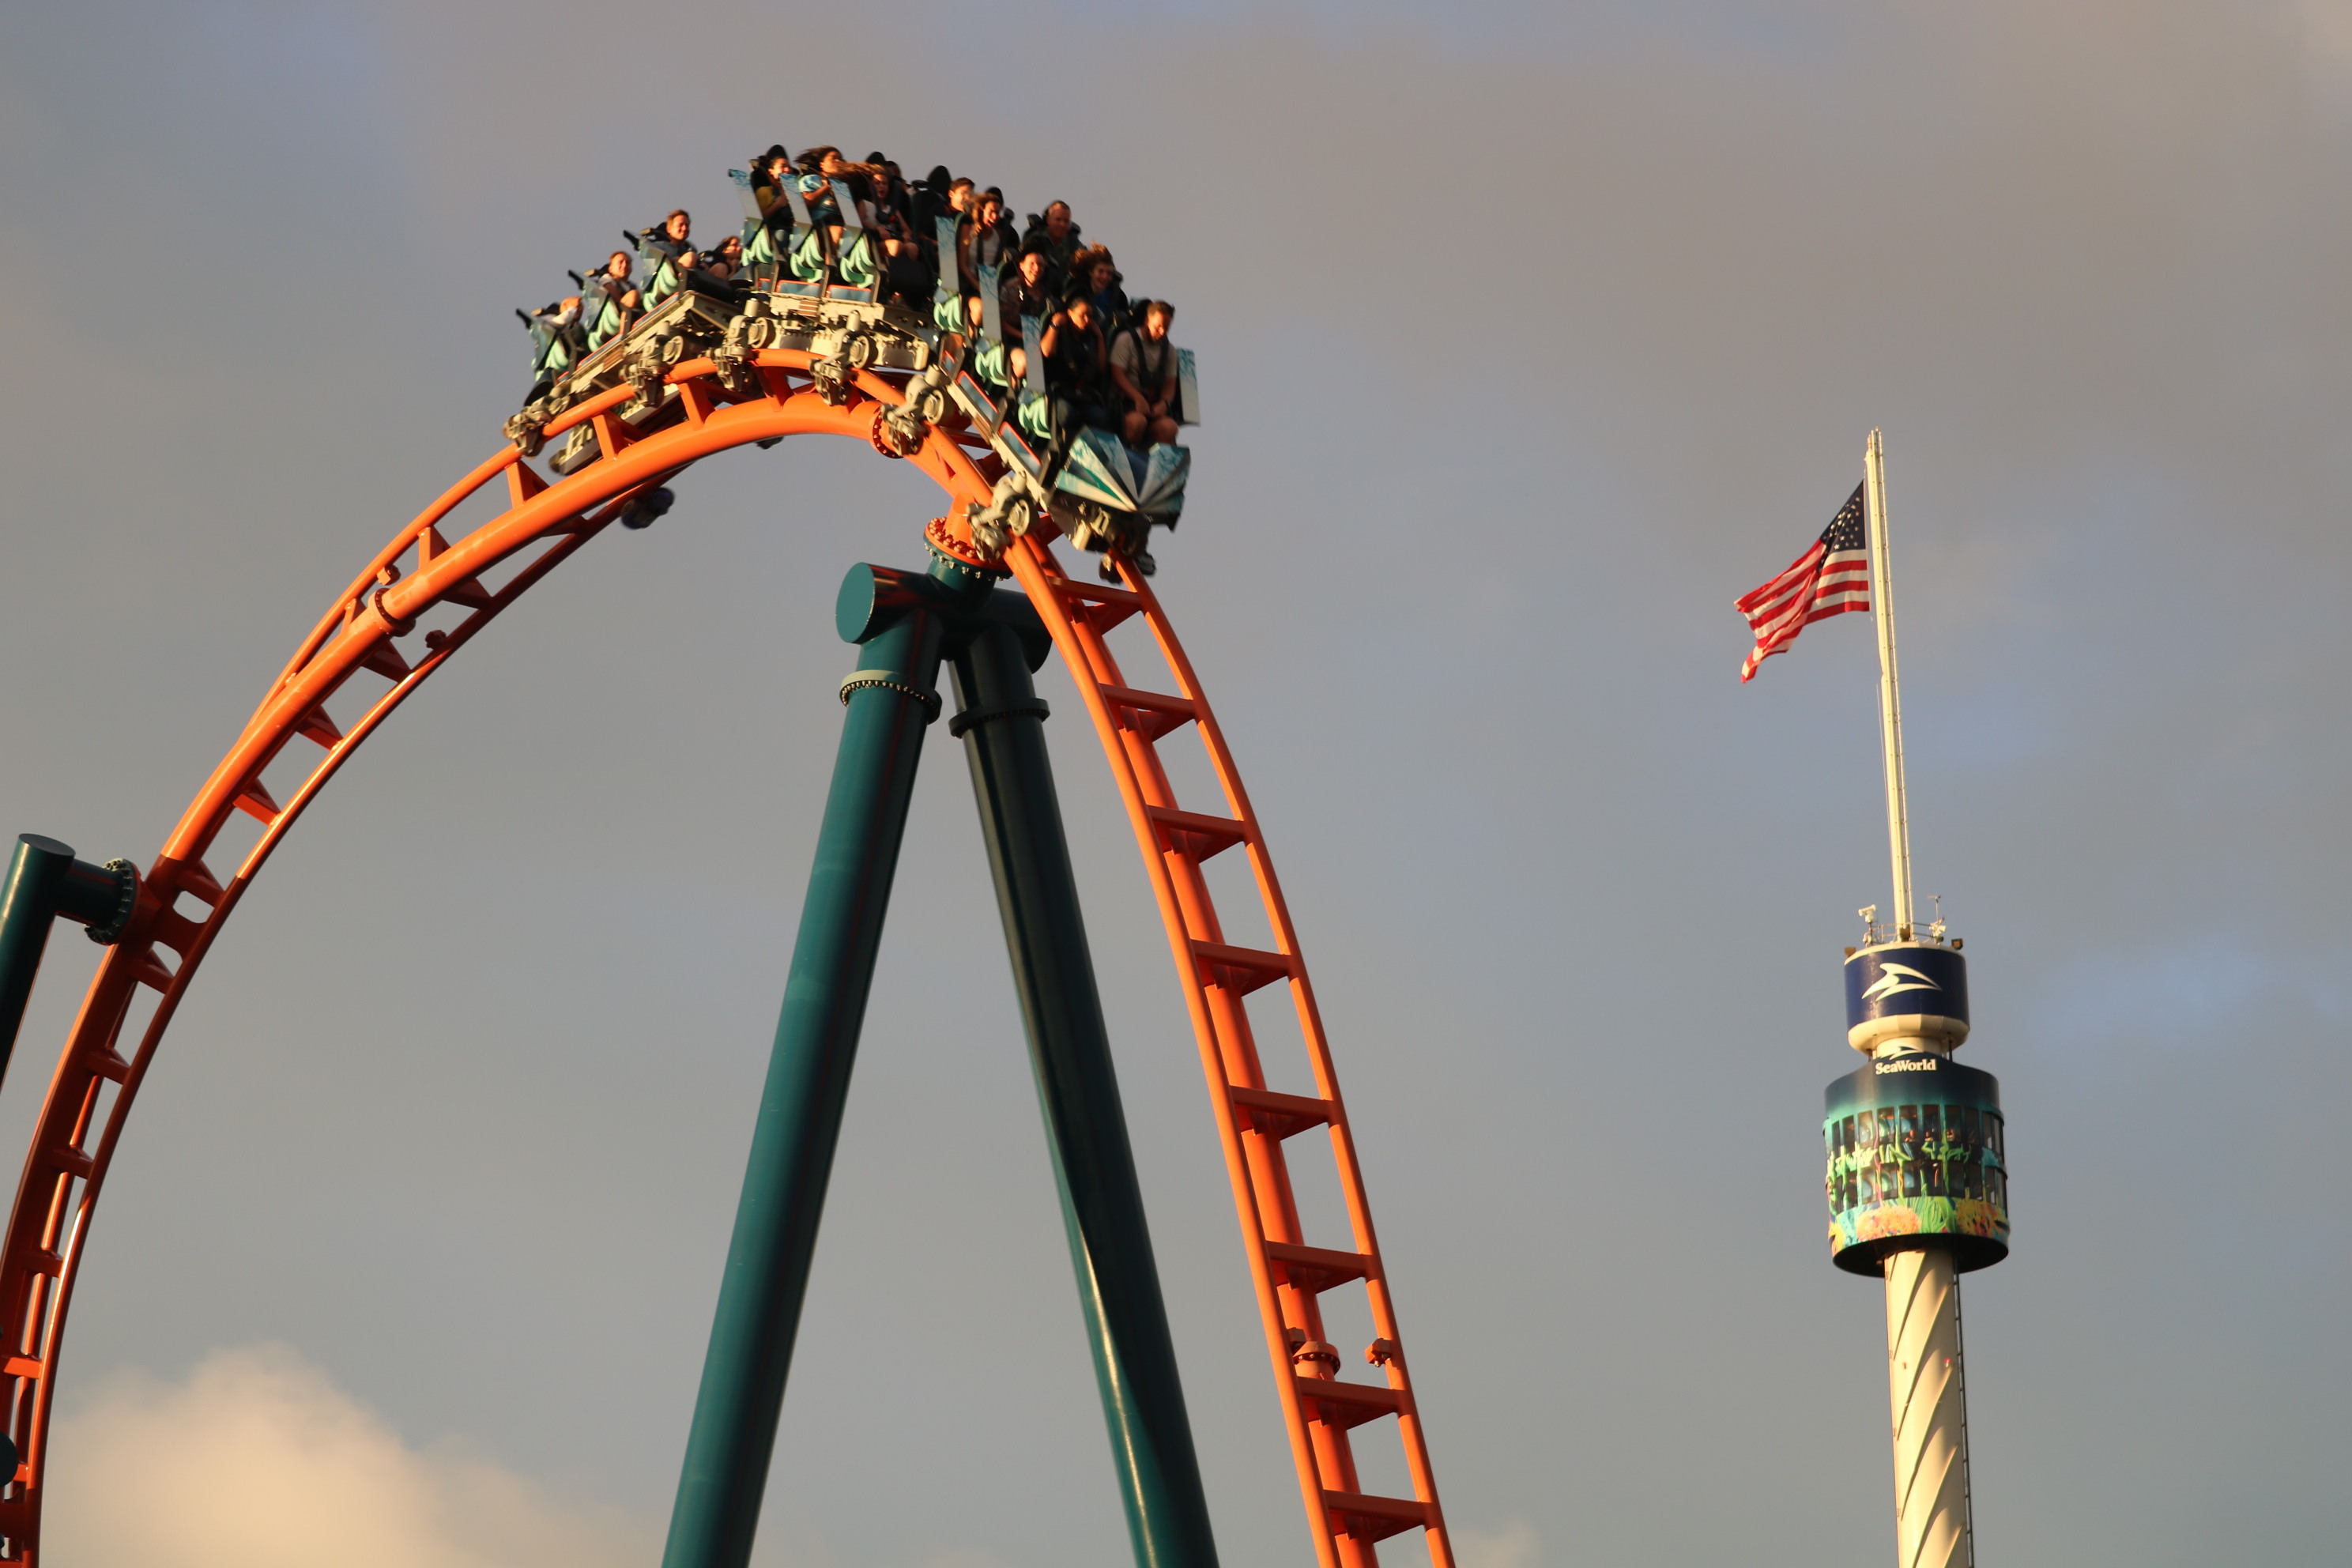 SeaWorld Orlando plans new roller coaster